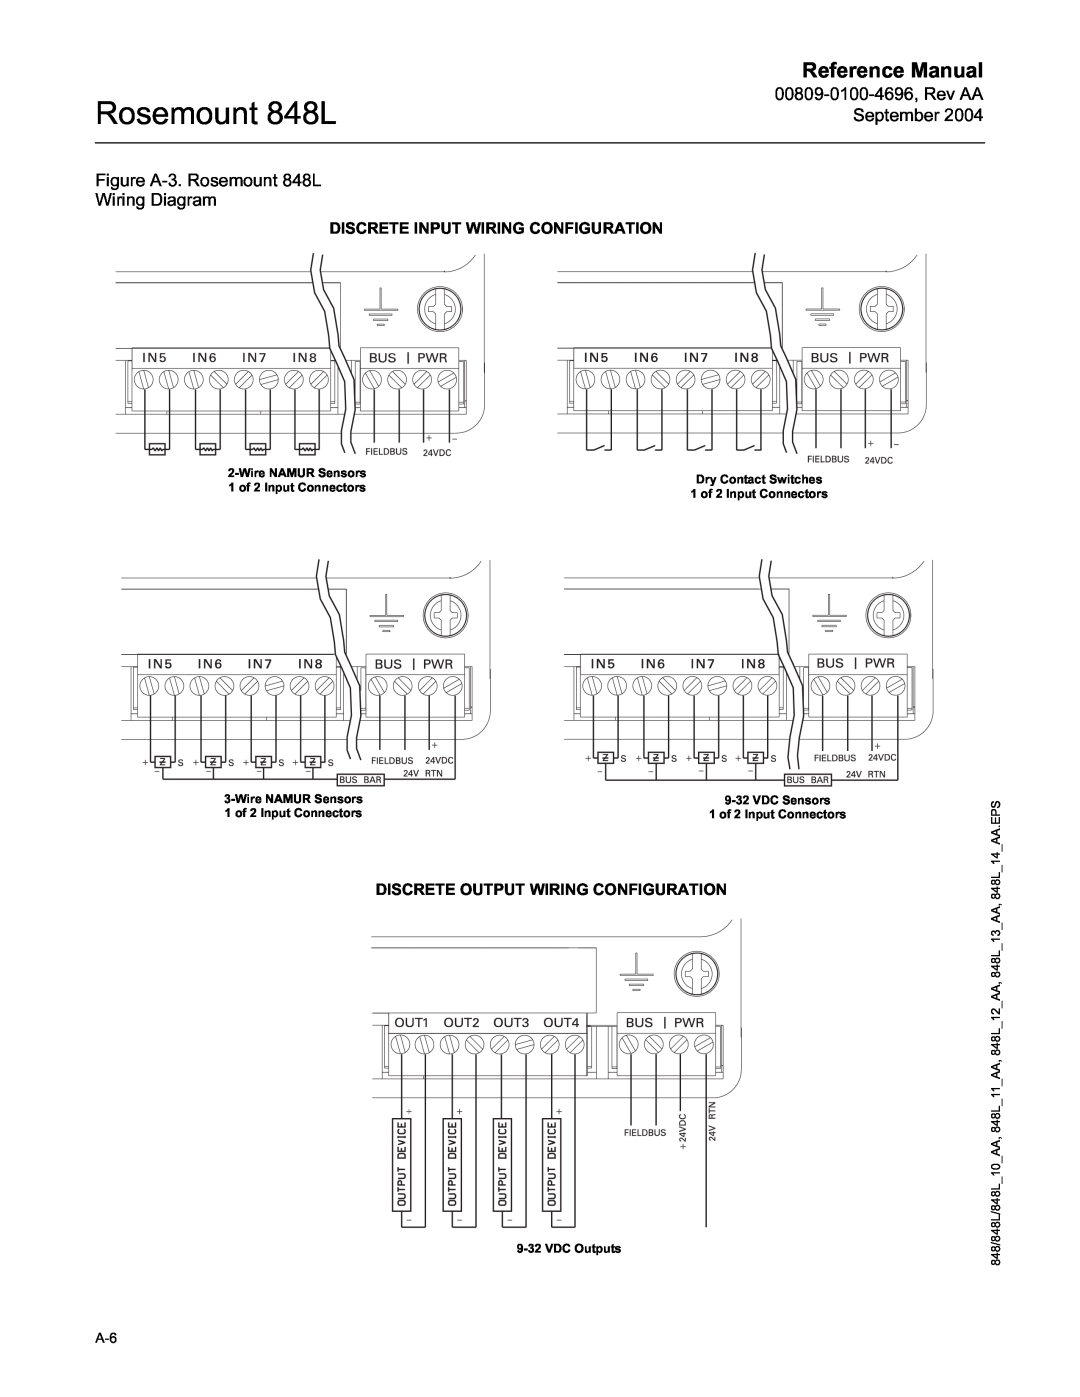 Emerson manual Reference Manual, 00809-0100-4696,Rev AA September, Figure A-3.Rosemount 848L Wiring Diagram 